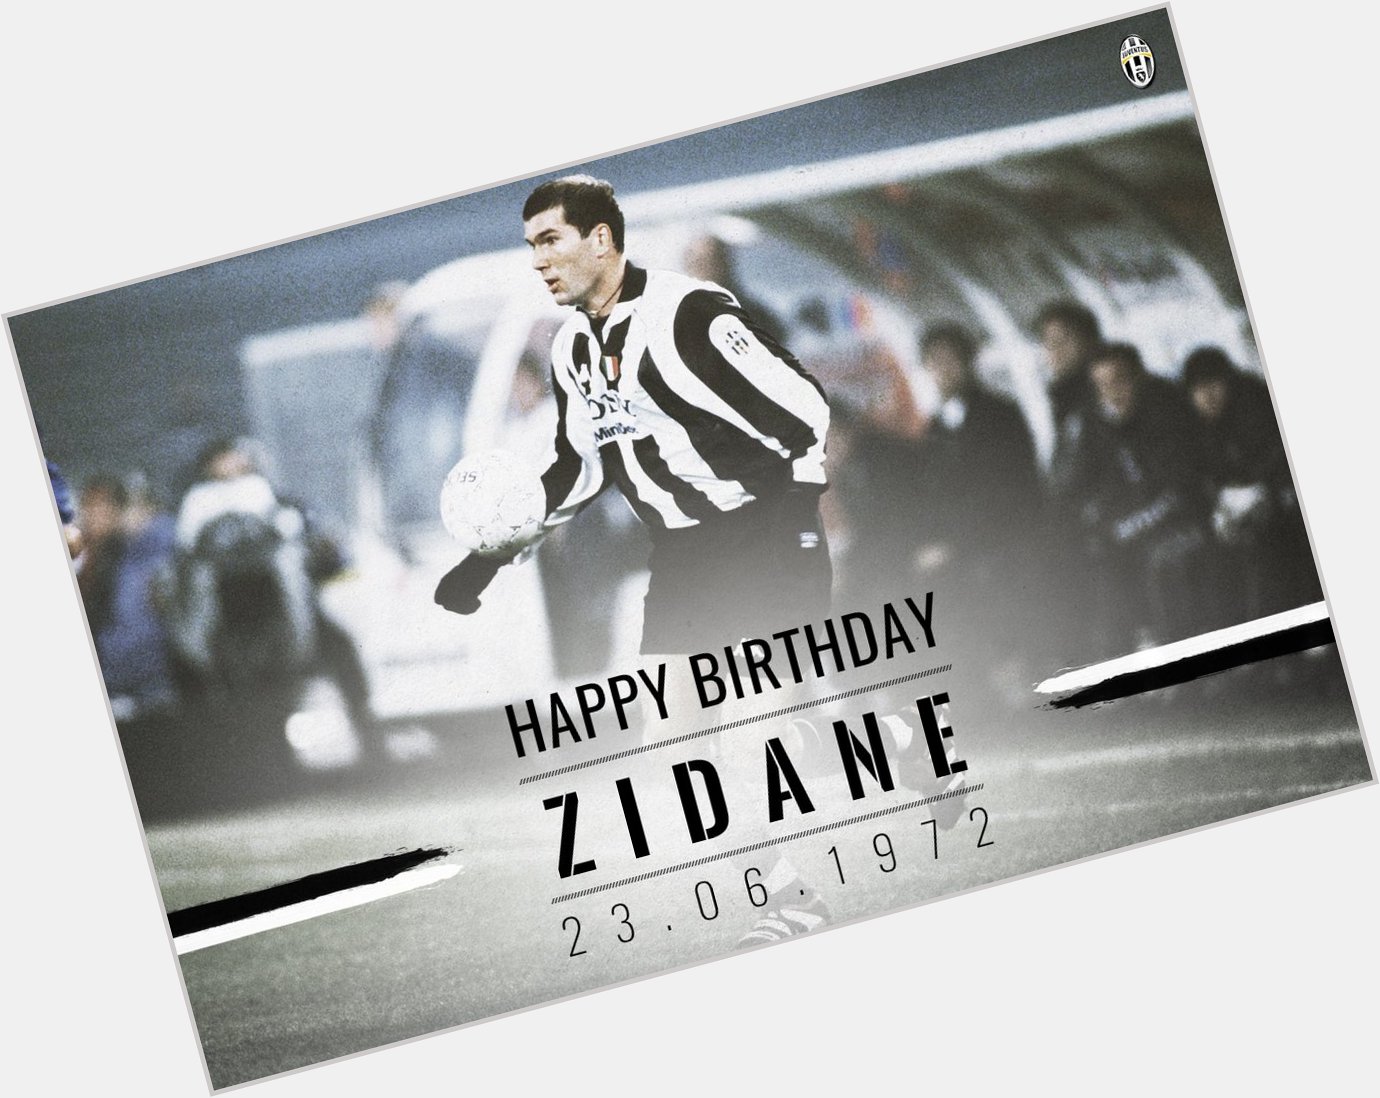 212 games and 31 goals in 5 memorable seasons in Turin. 

Happy birthday, Zinedine Zidane! 